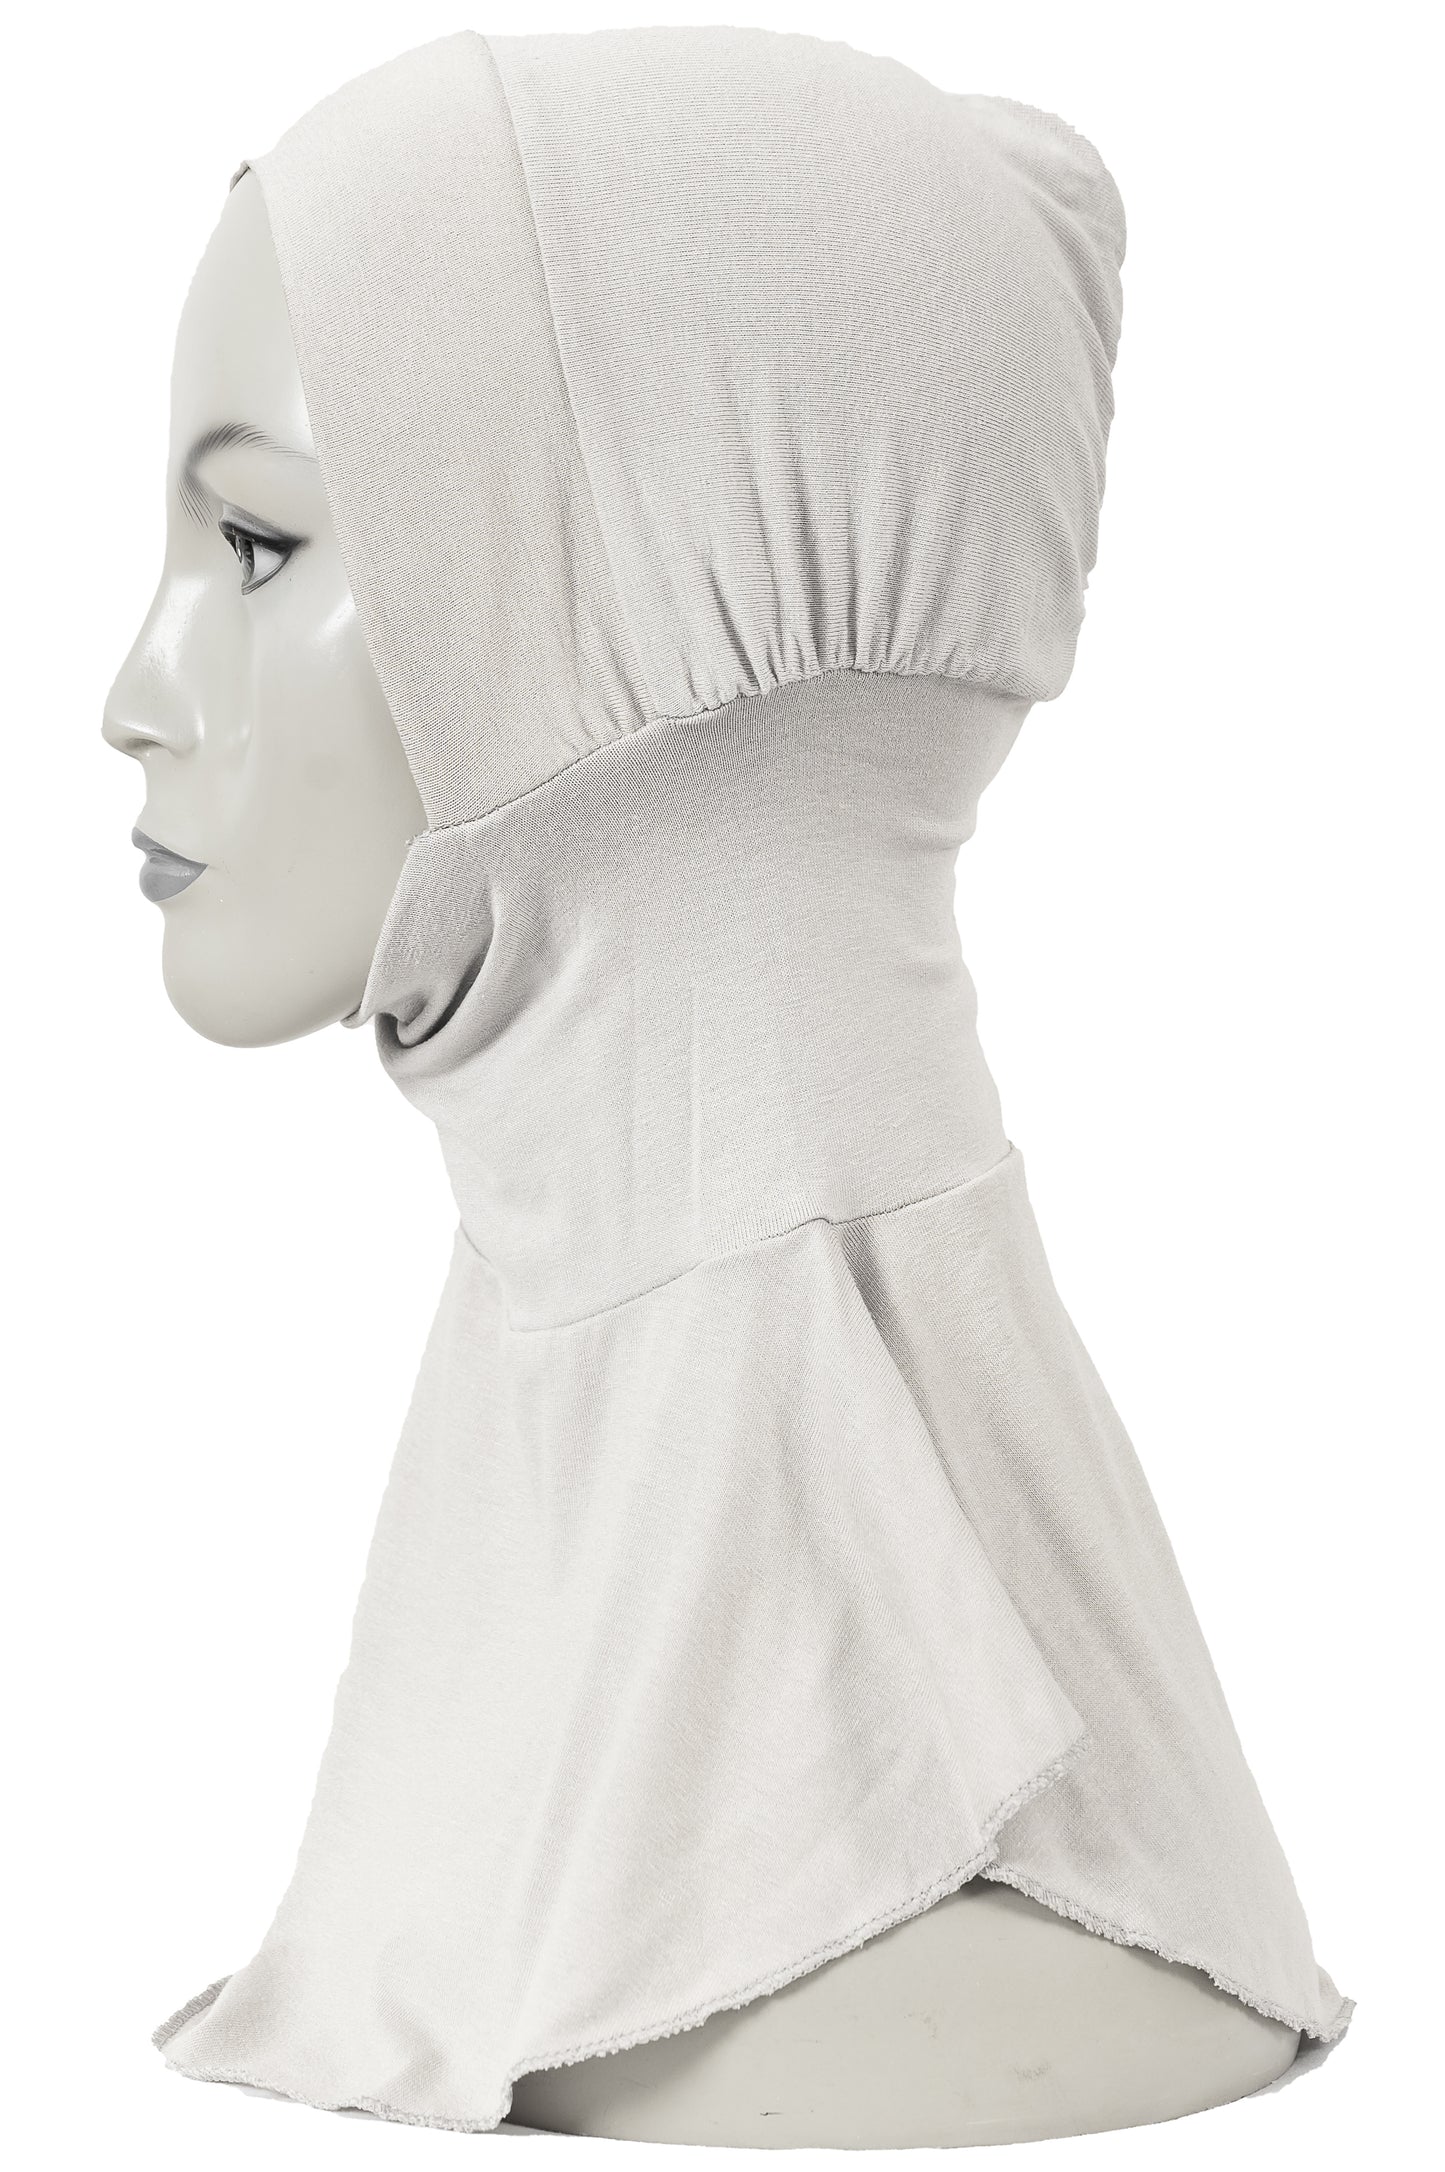 New- Ninja Cotton Cap in Off White